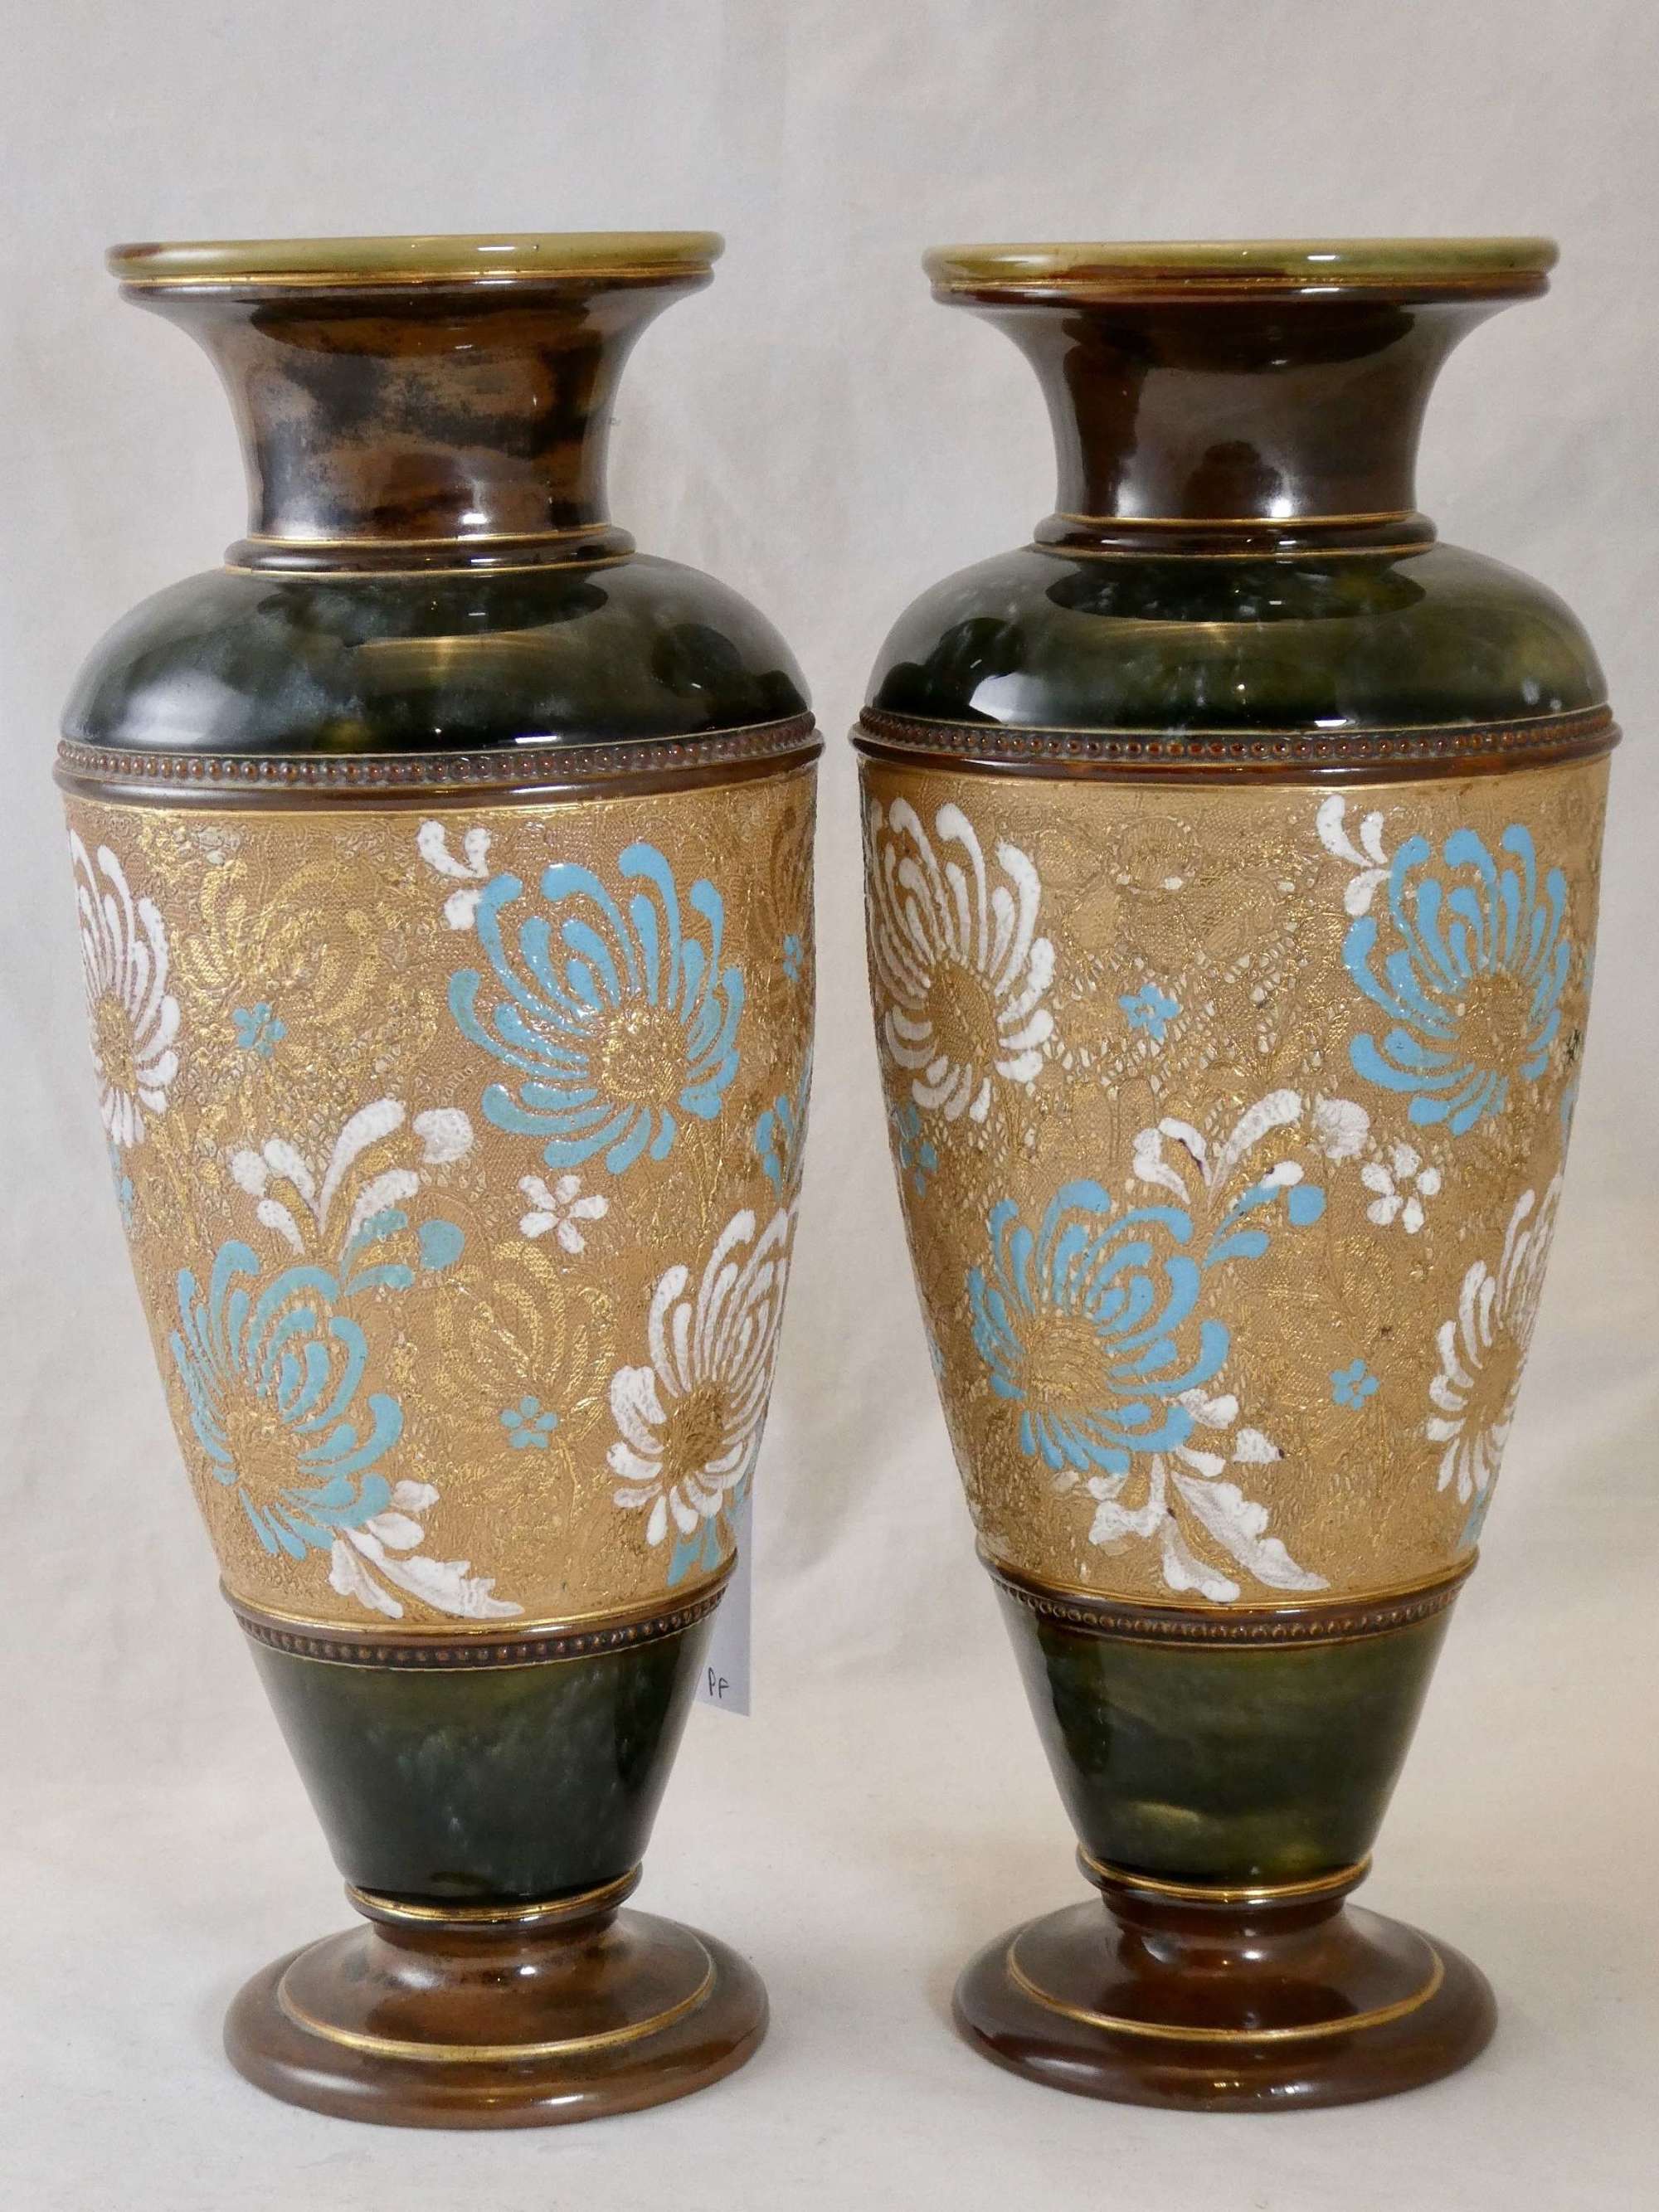 Pair of Doulton Vases, circa 1900